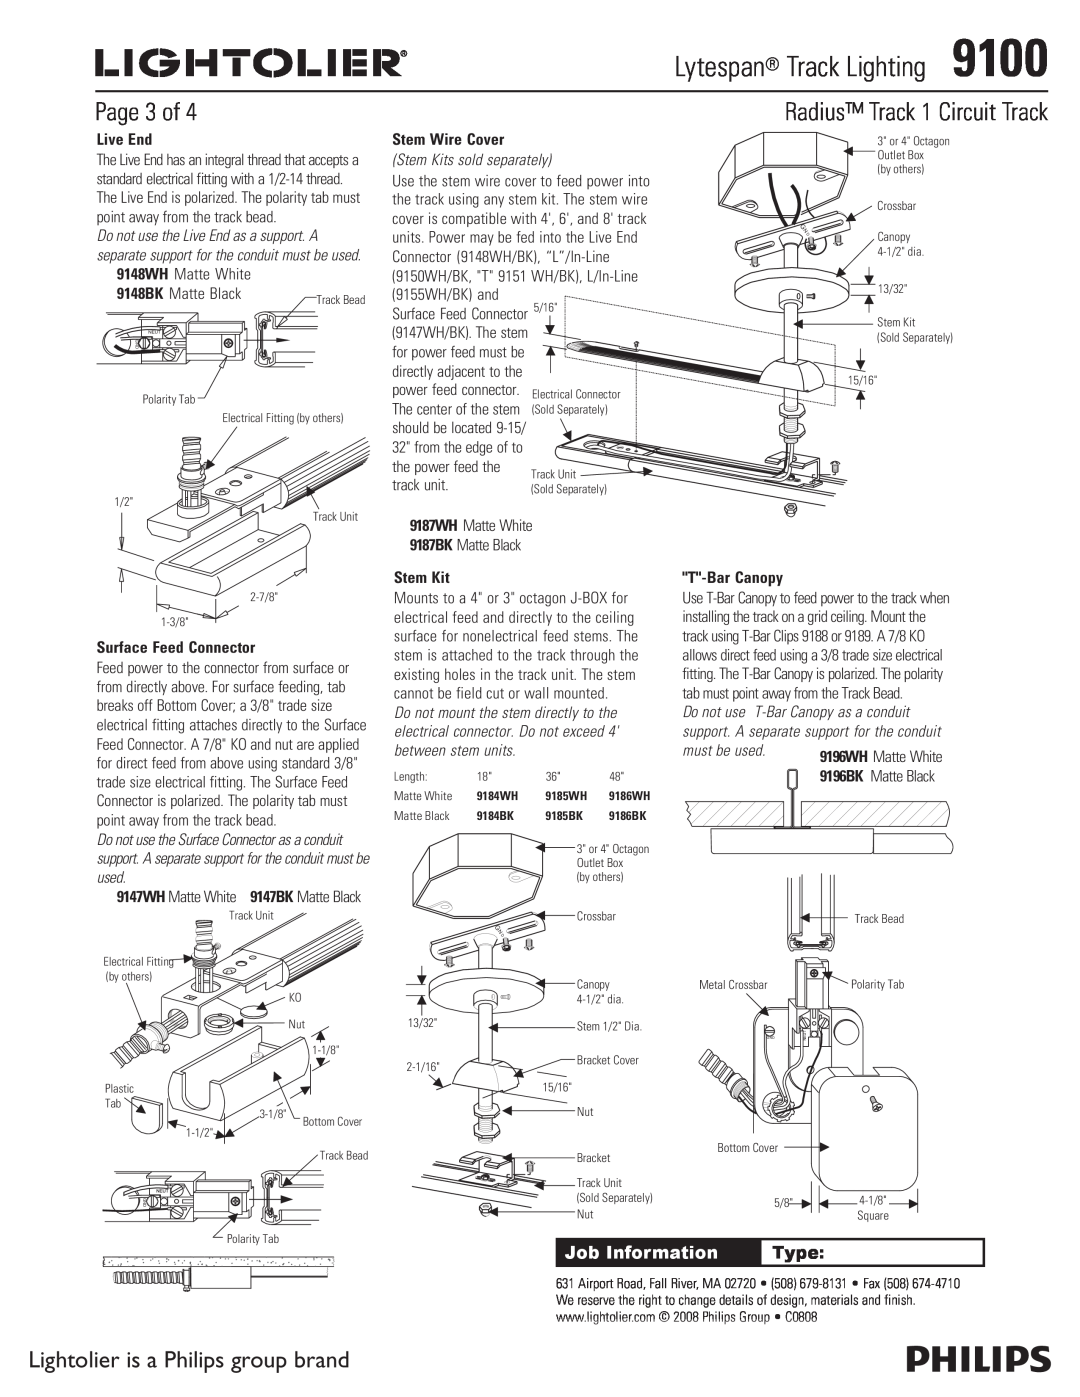 Lightolier Page 3 of, Radius Track 1 Circuit Track, Lightolier is a Philips group brand, Lytespan Track Lighting9100 